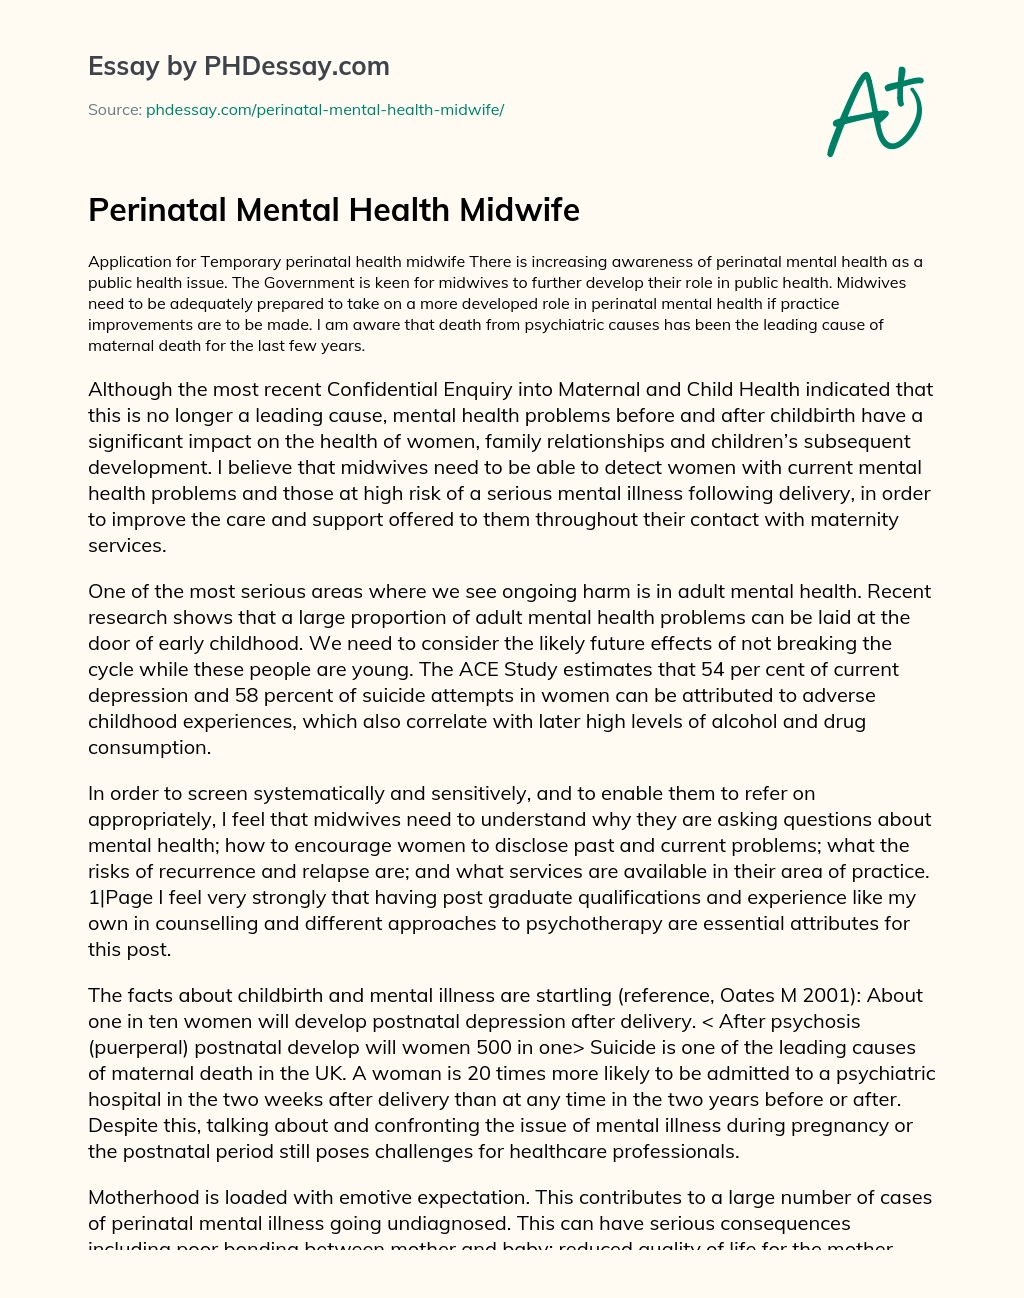 Perinatal Mental Health Midwife essay